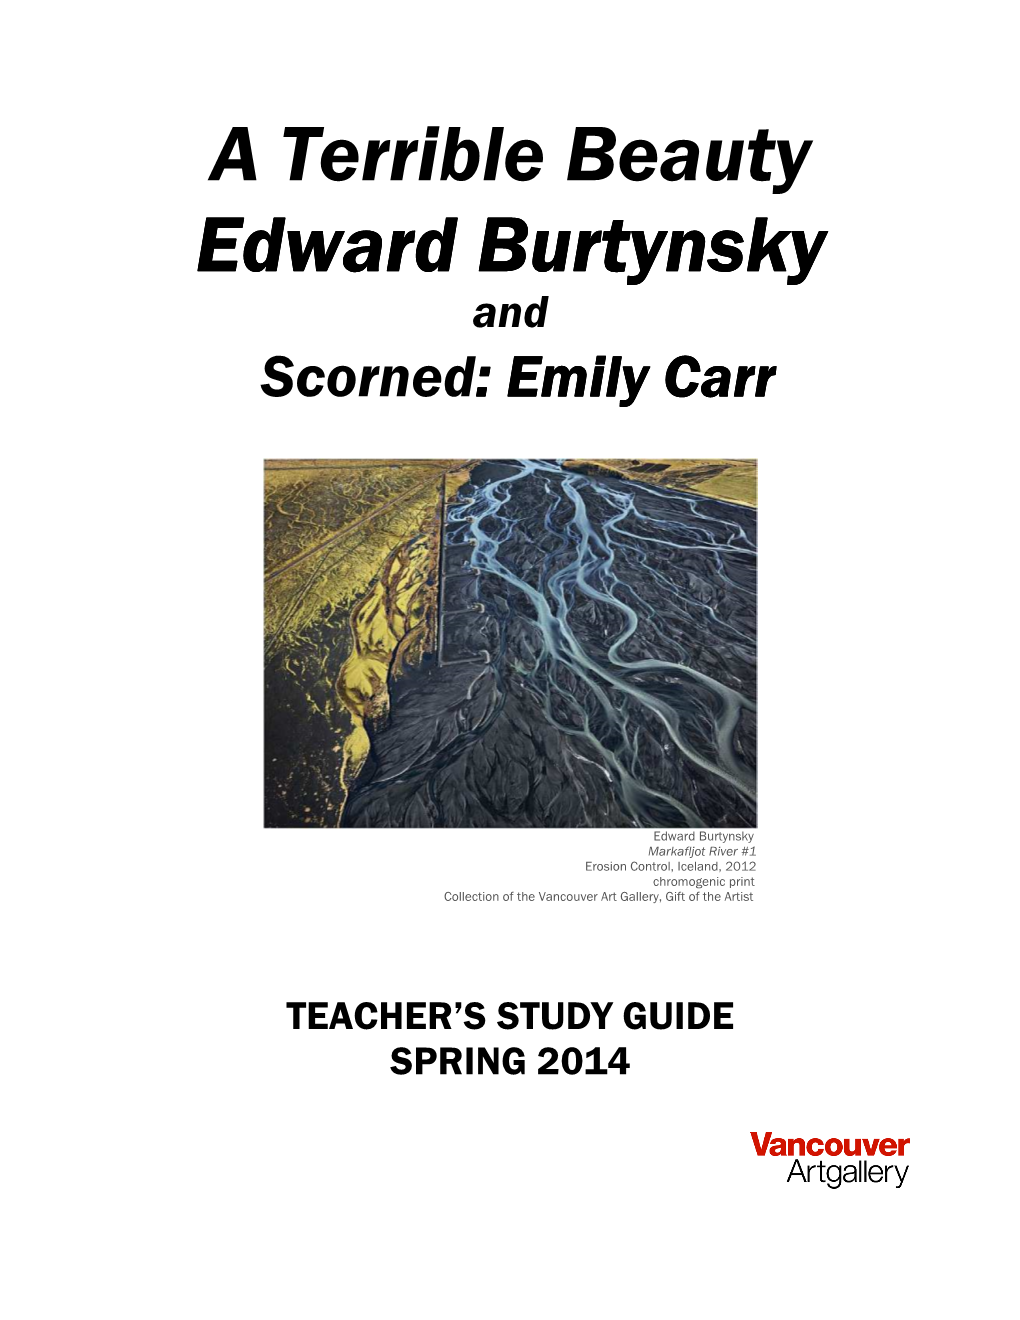 A Terrible Beauty: Edward Burtynsky and Scorned: Emily Carr